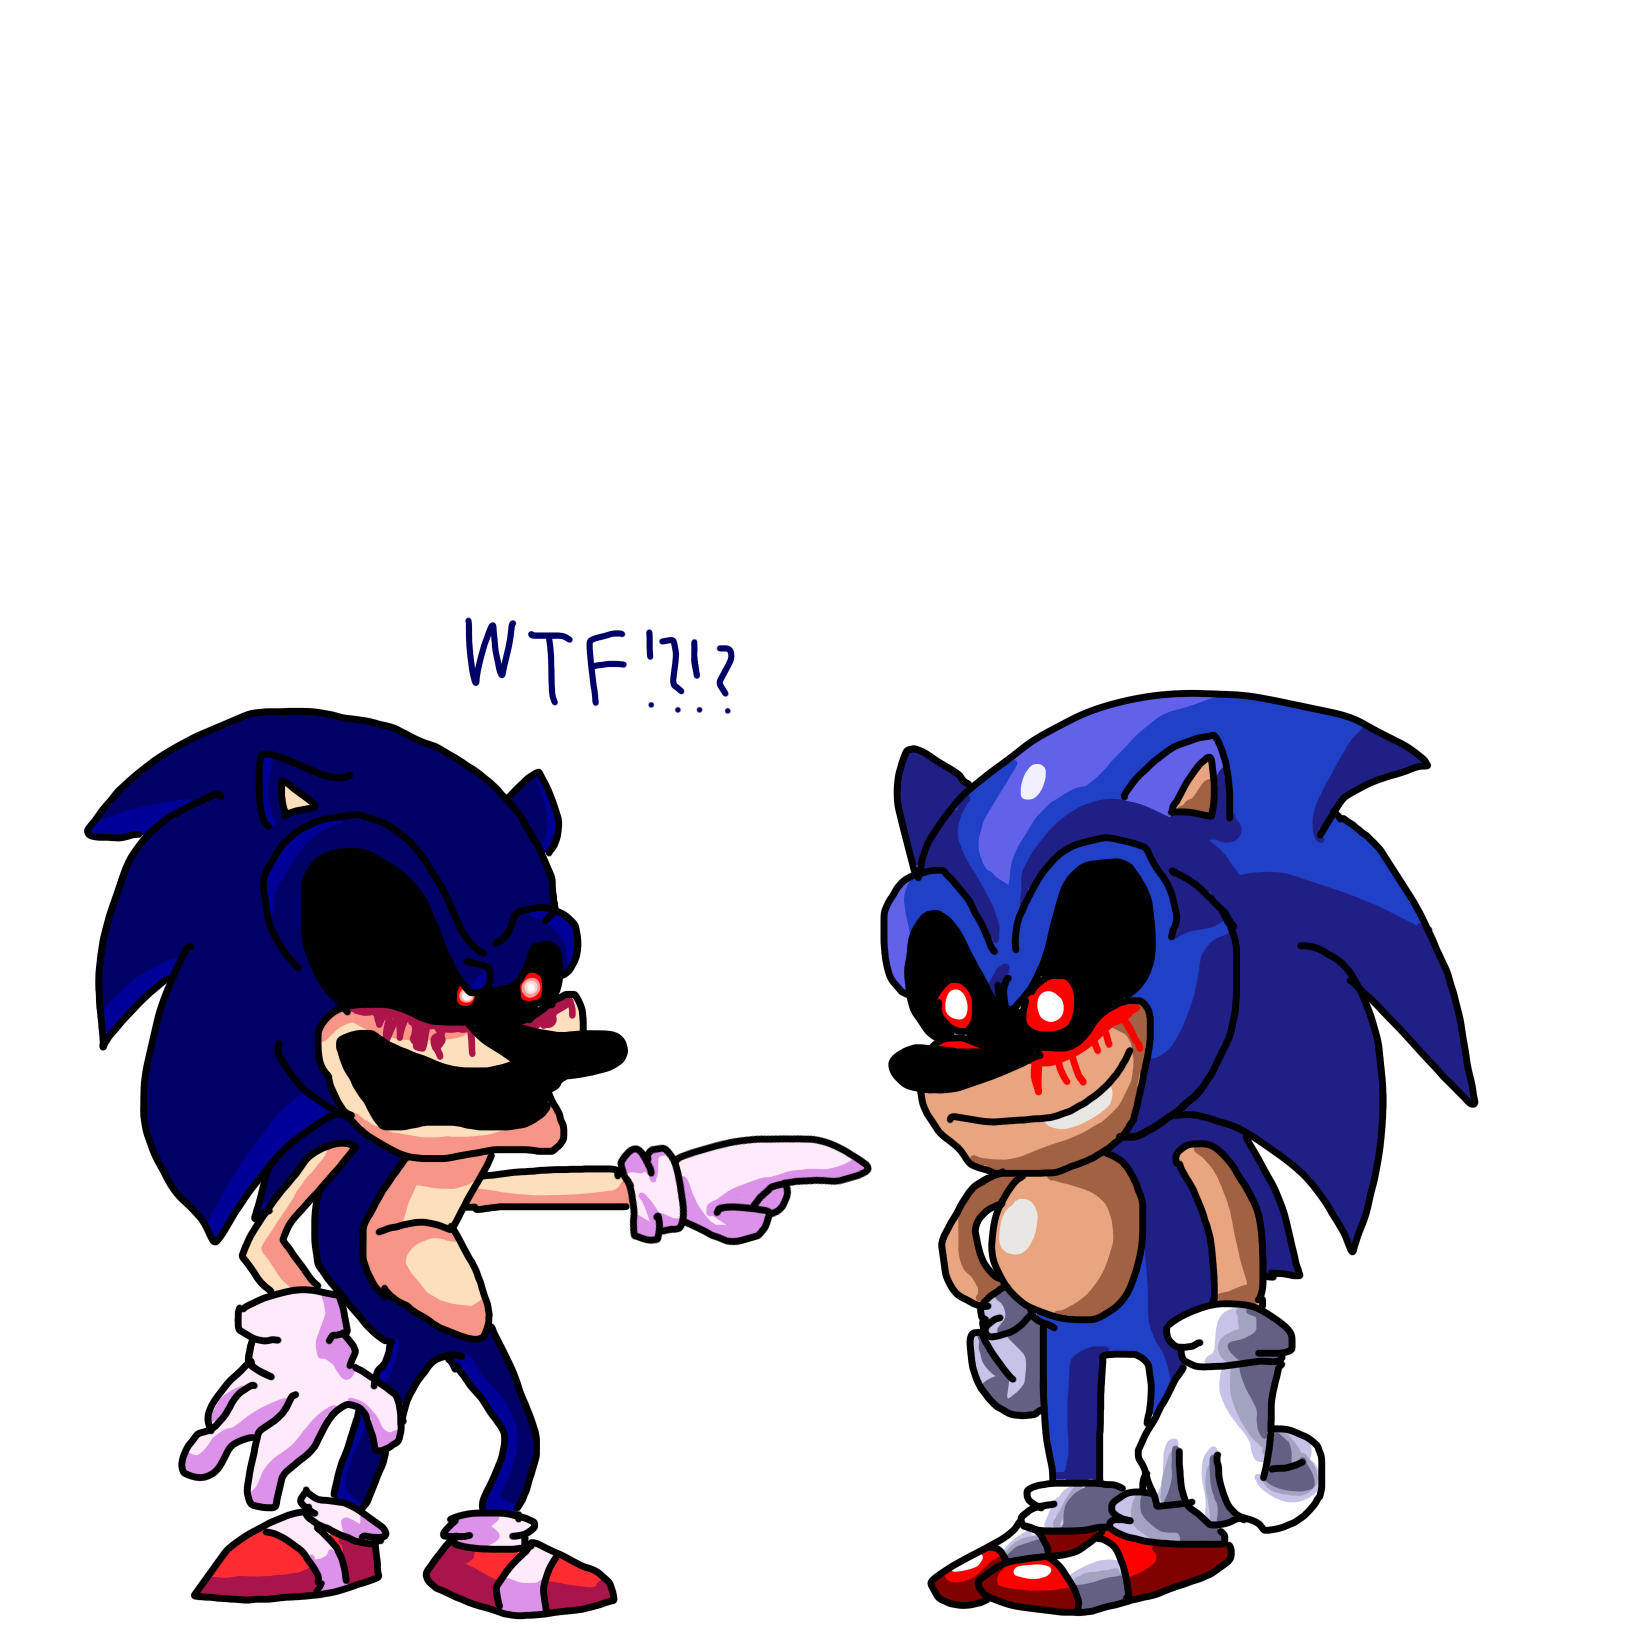 Original Sonic.EXE Meeting Remake Sonic.EXE : r/SonicEXE